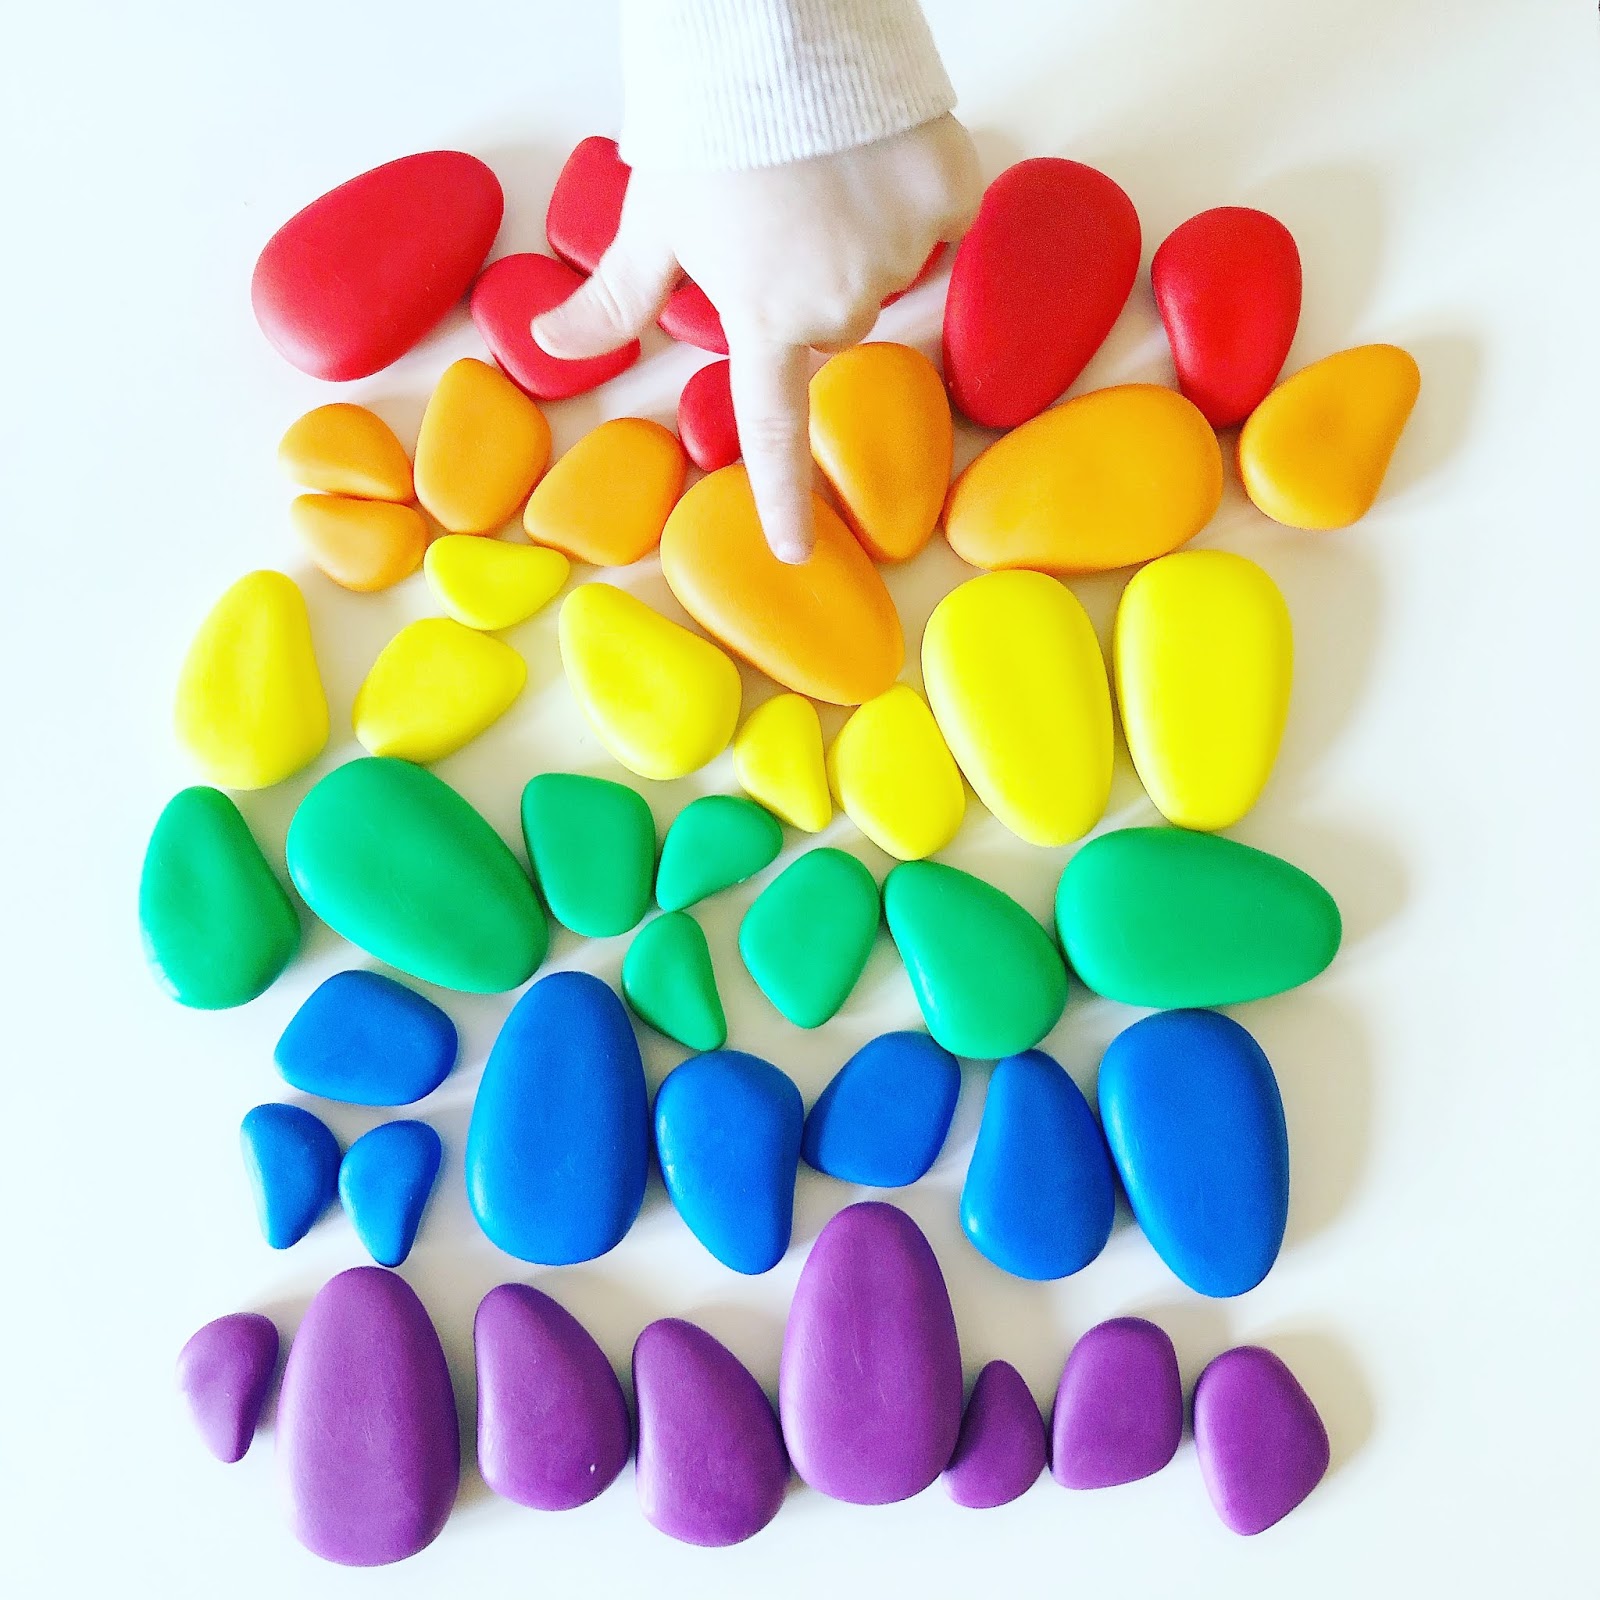 edx education_KOL_Lucy Baker-Rainbow Pebbles-1